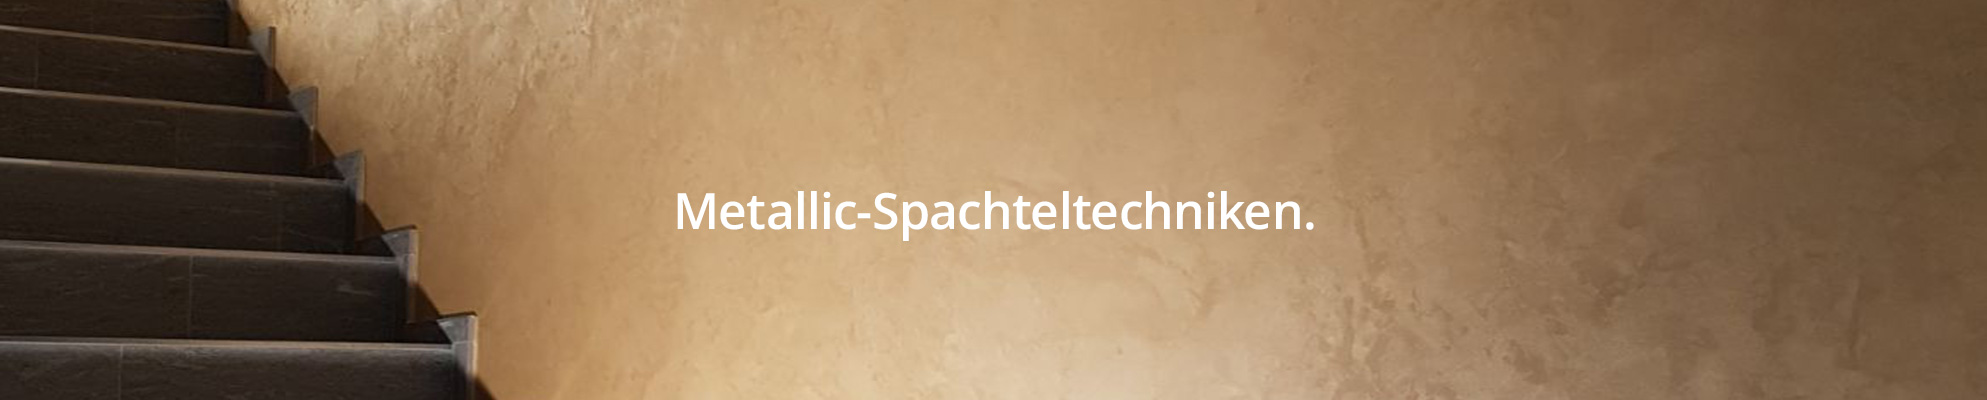 Metallic-Spachteltechnik-Maler-Hauser